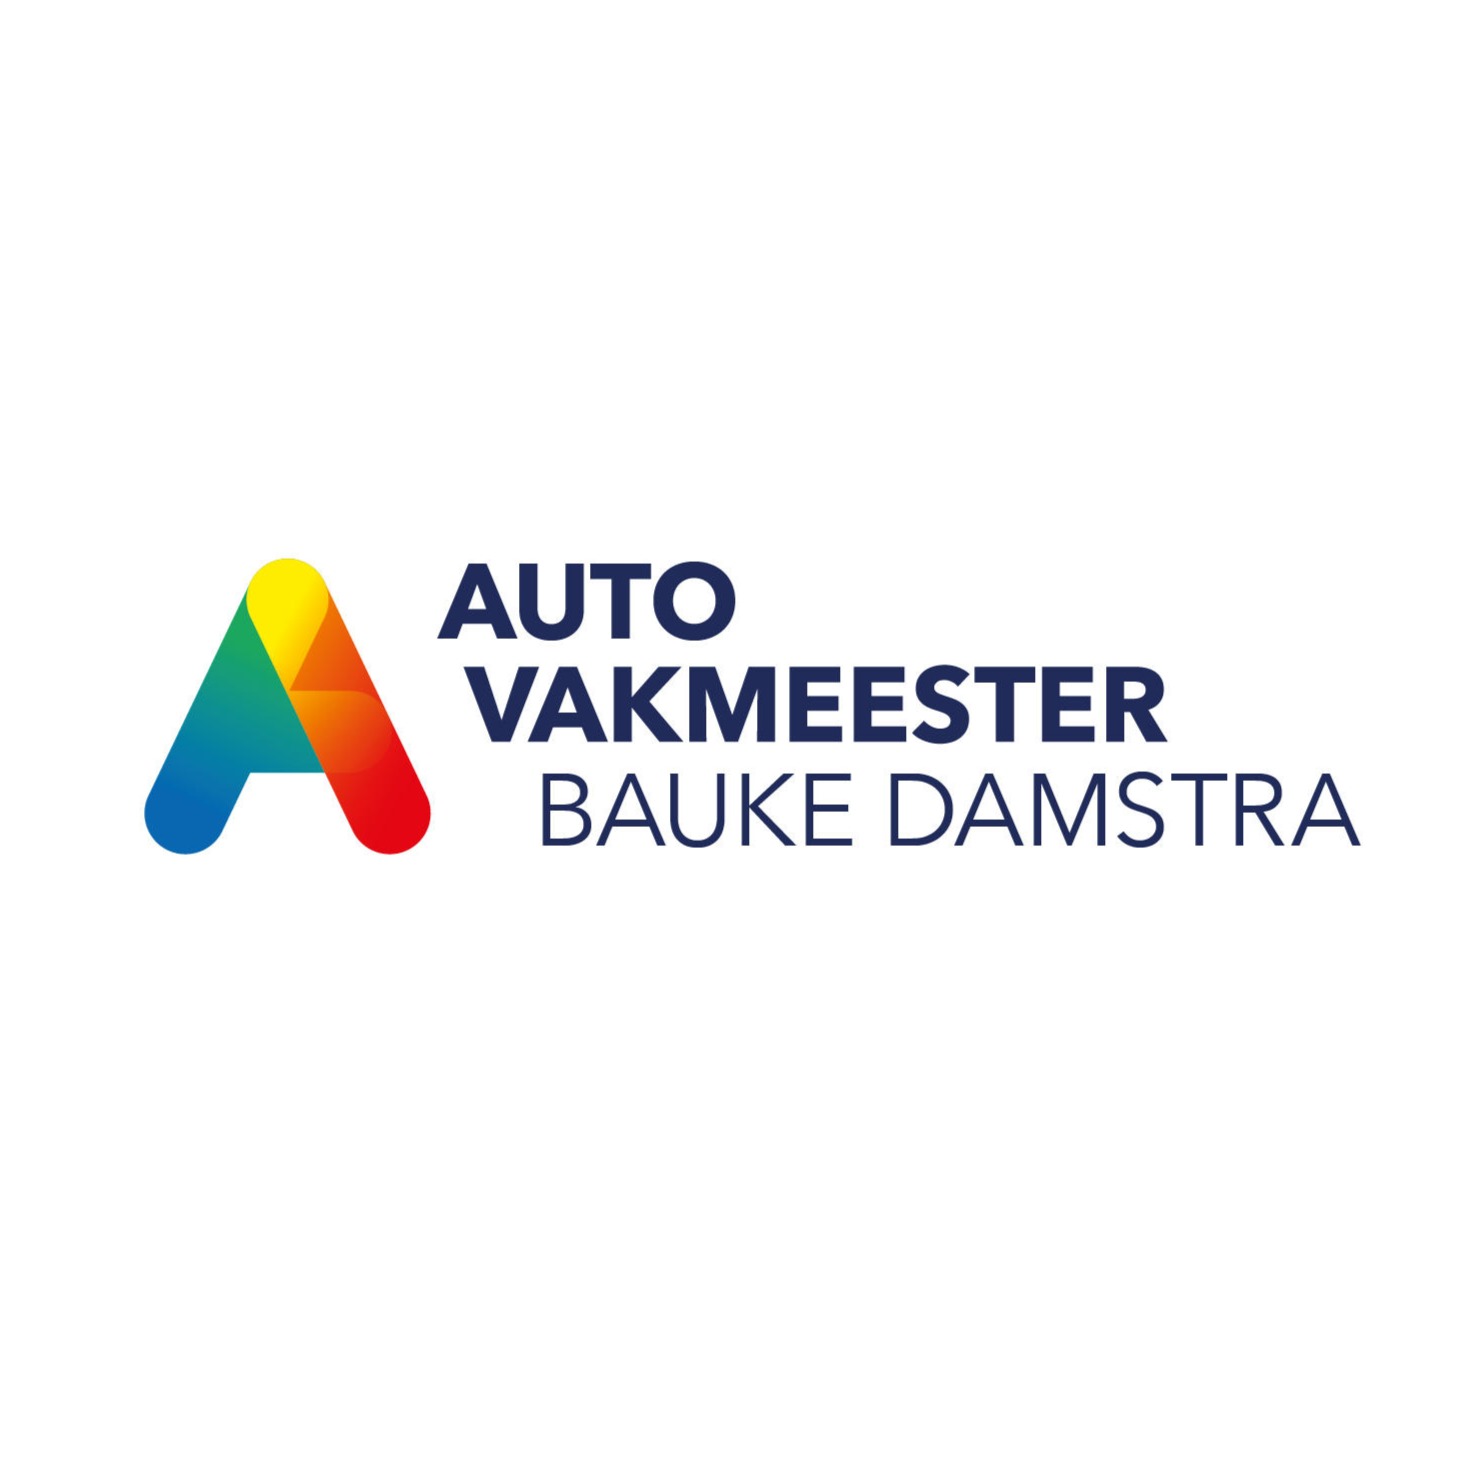 Autovakmeester Bauke Damstra Logo